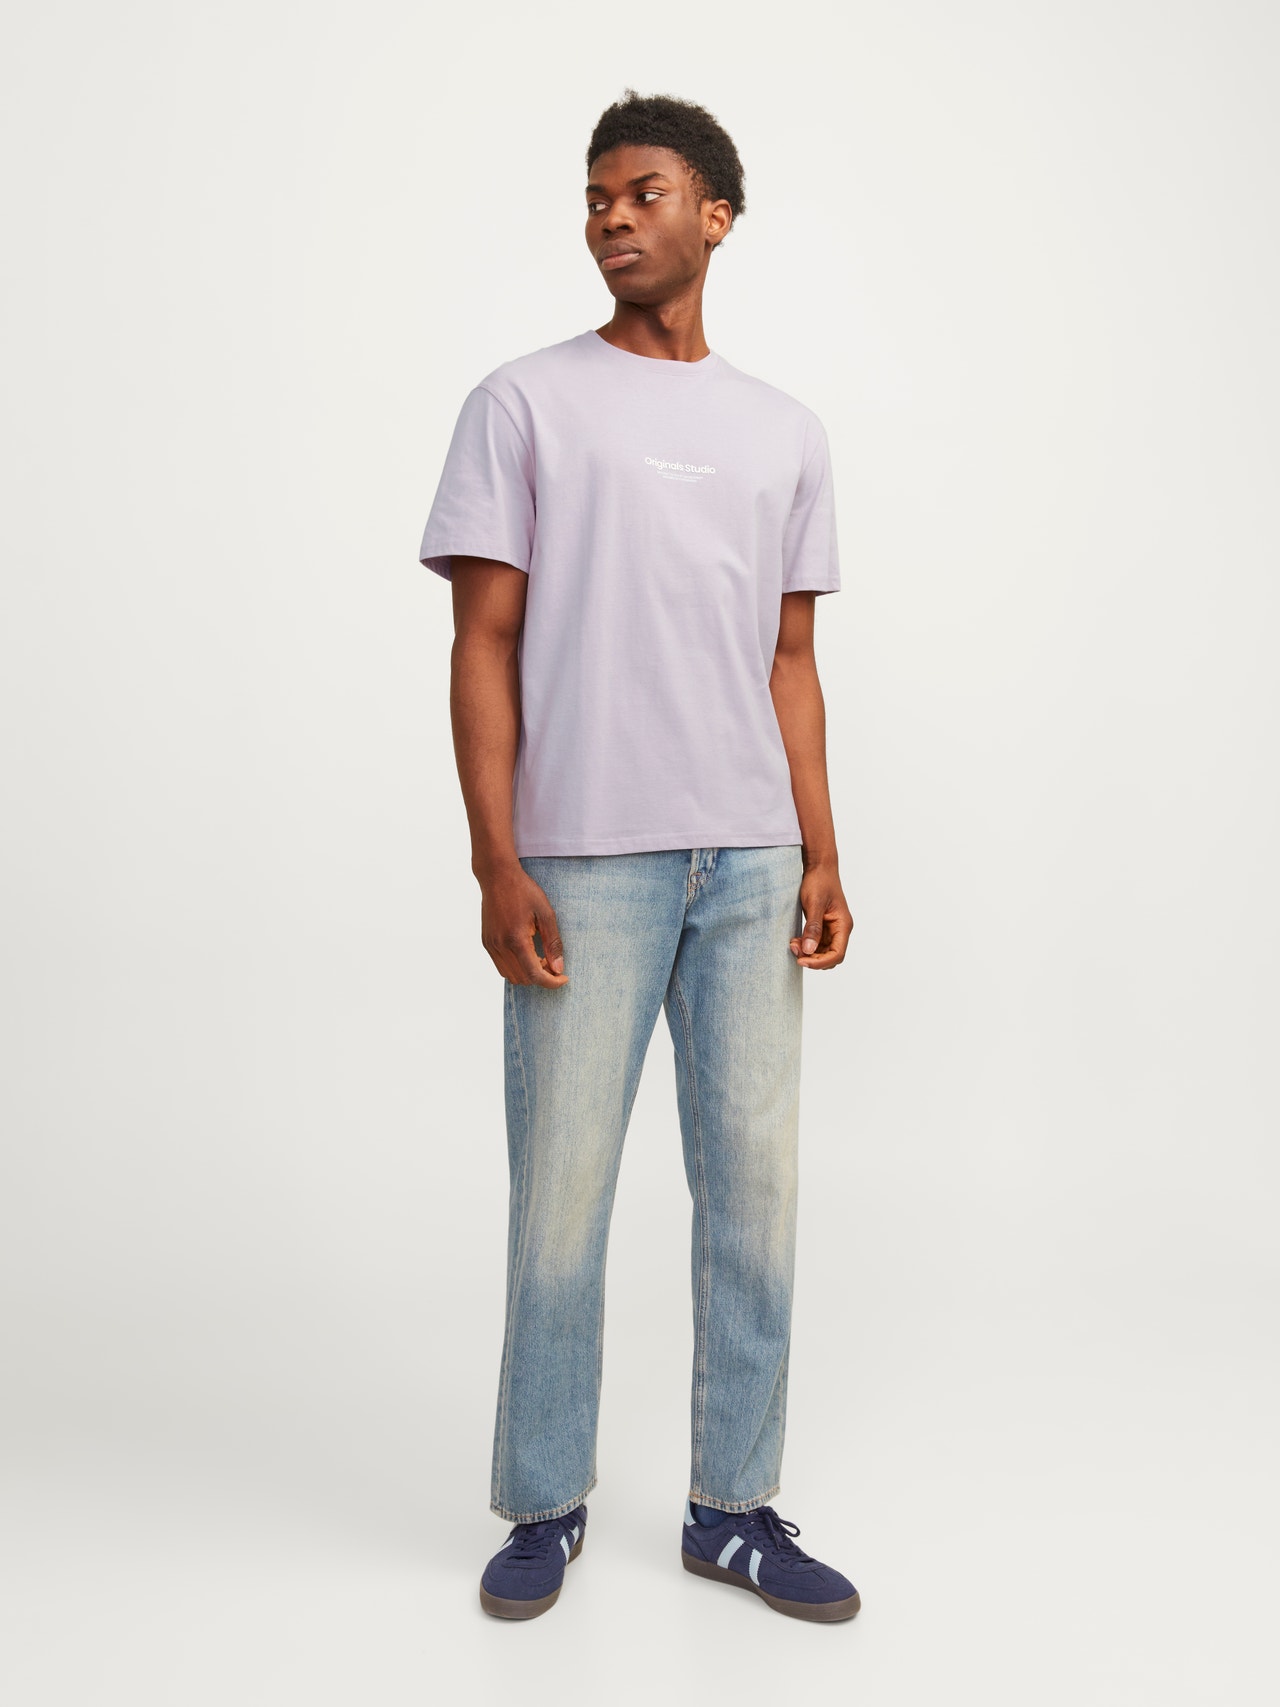 Jack & Jones T-shirt Estampar Decote Redondo -Lavender Frost - 12240121